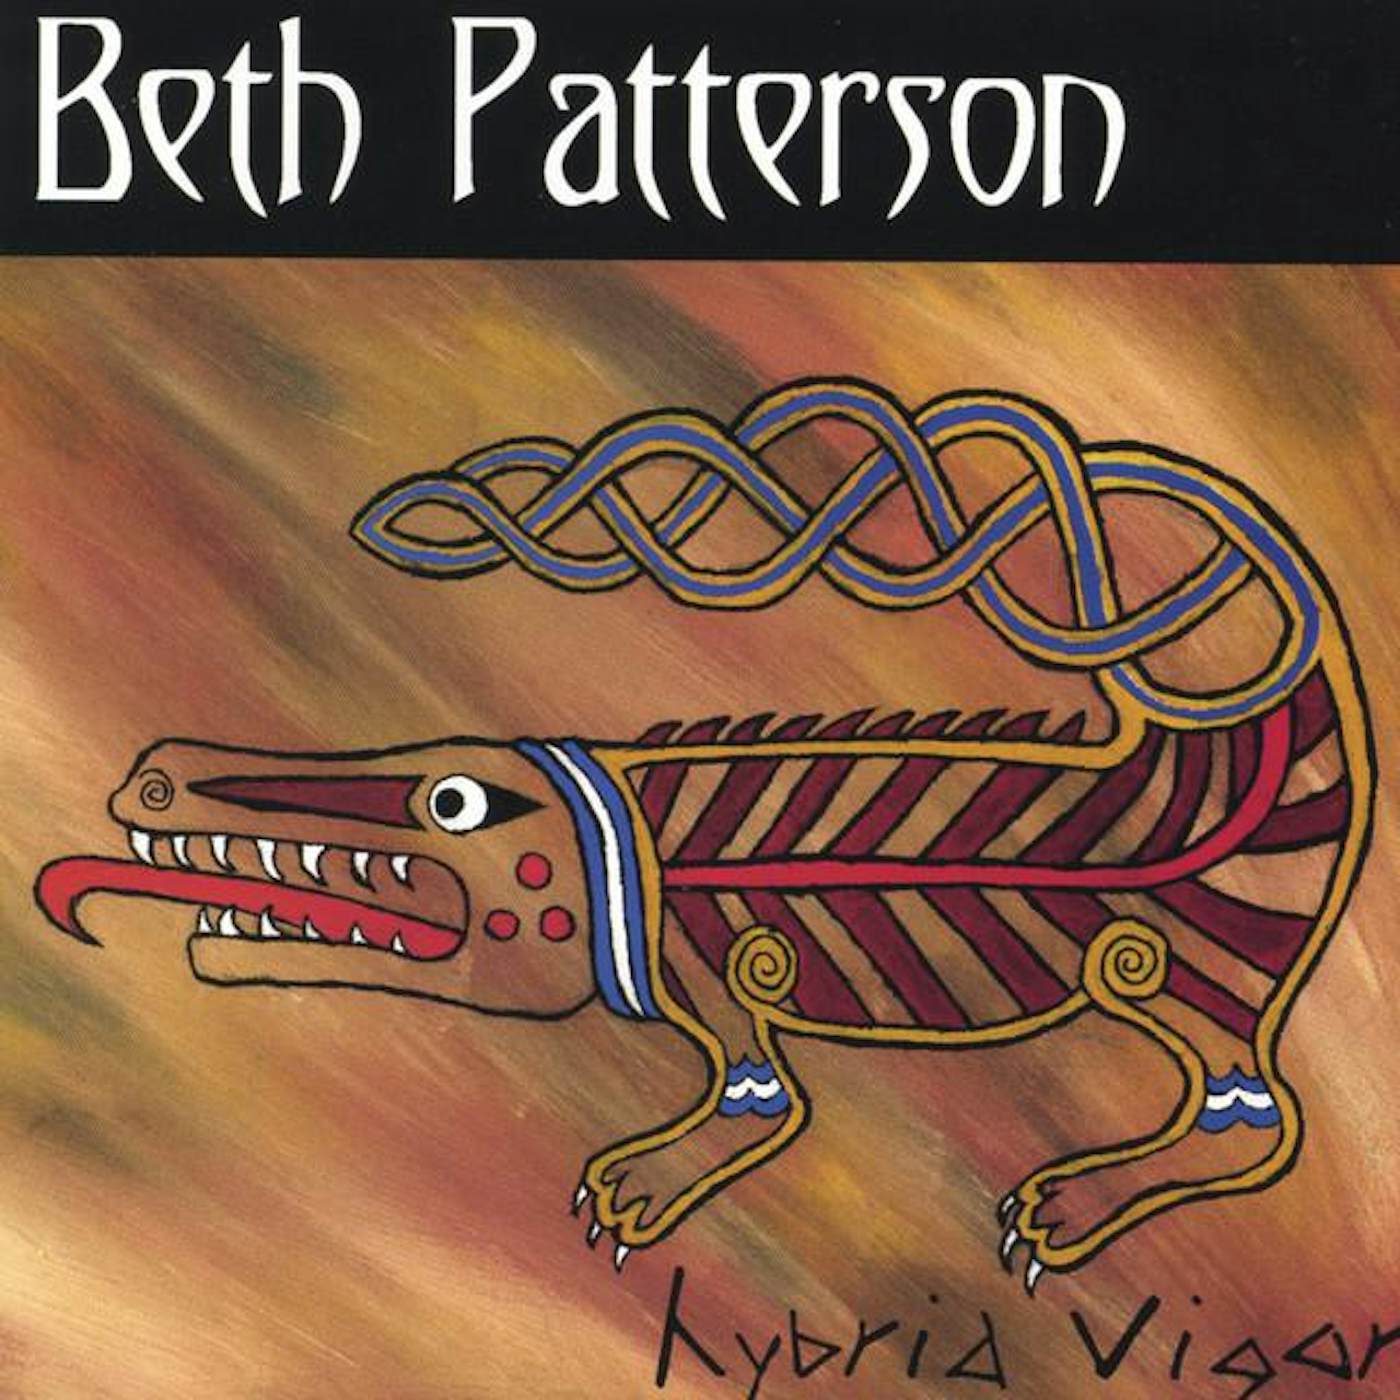 Beth Patterson